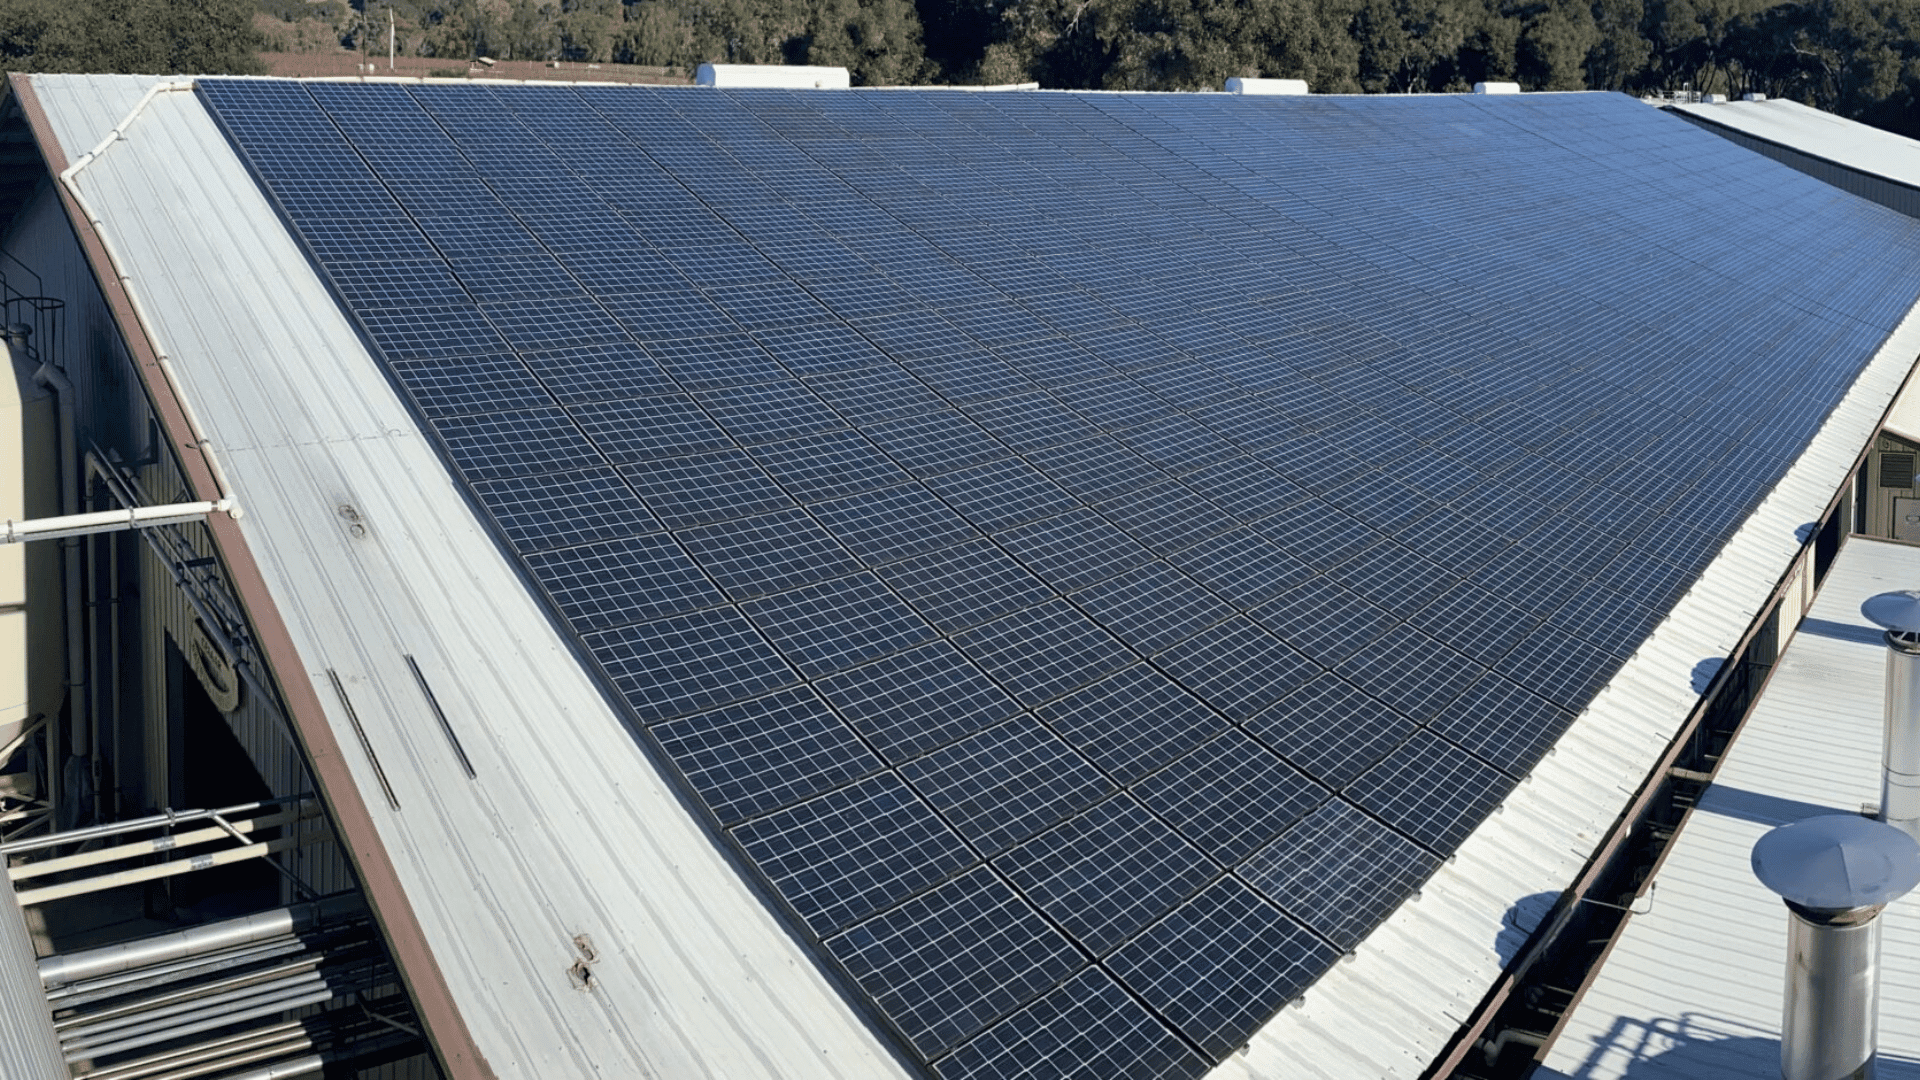 Anderson Valley Brewing Company's solar panels